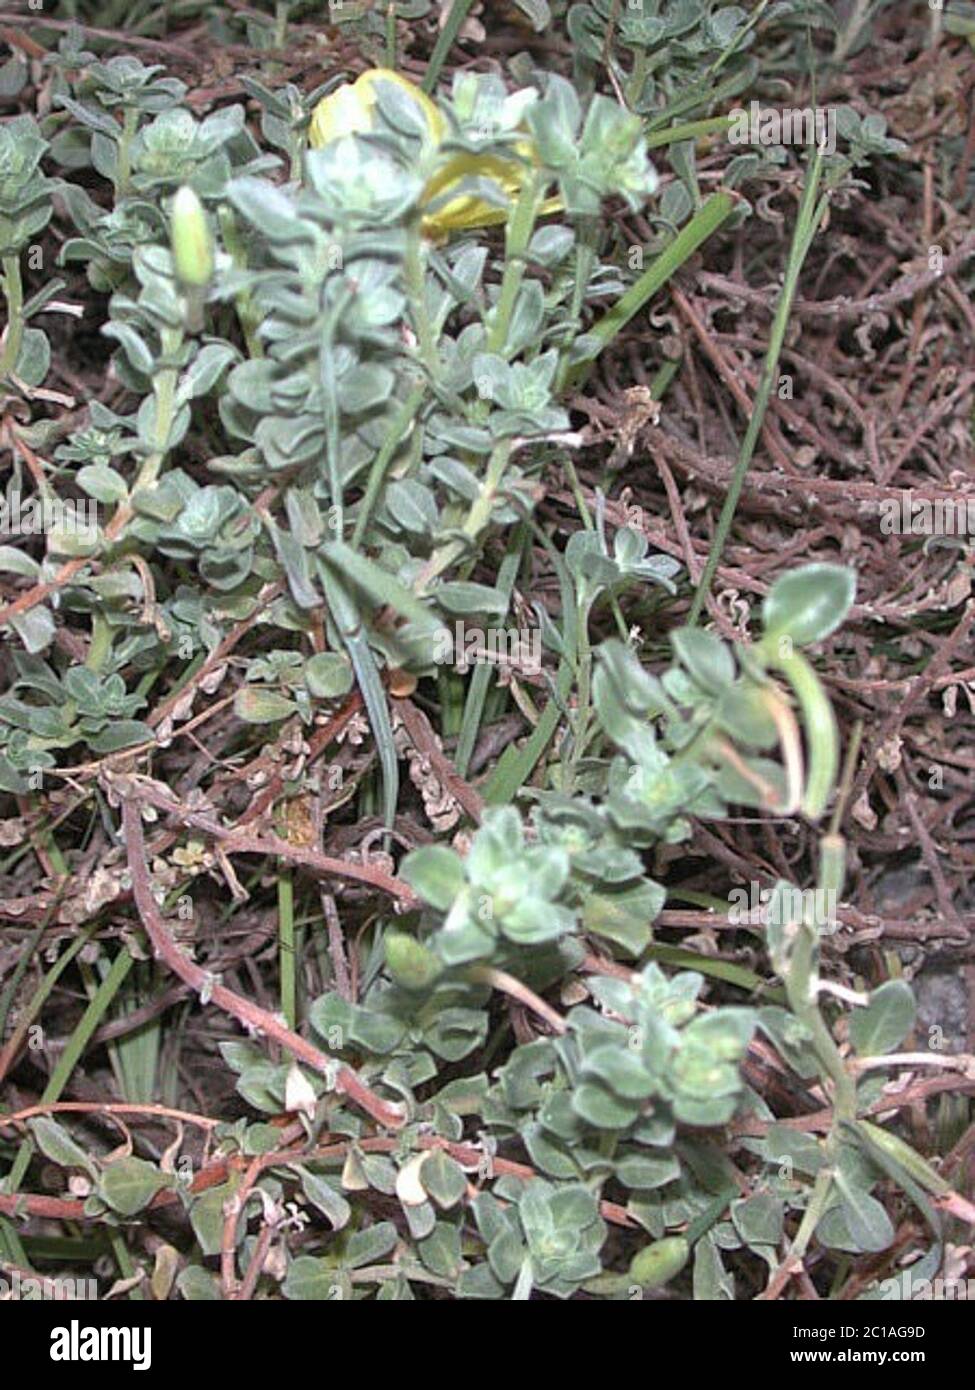 Oenotheradrummondiithalassaphila1.jpg Oenothera drummondii subsp thalassaphila Brandegee W Dietr WL Wagner. Stock Photo